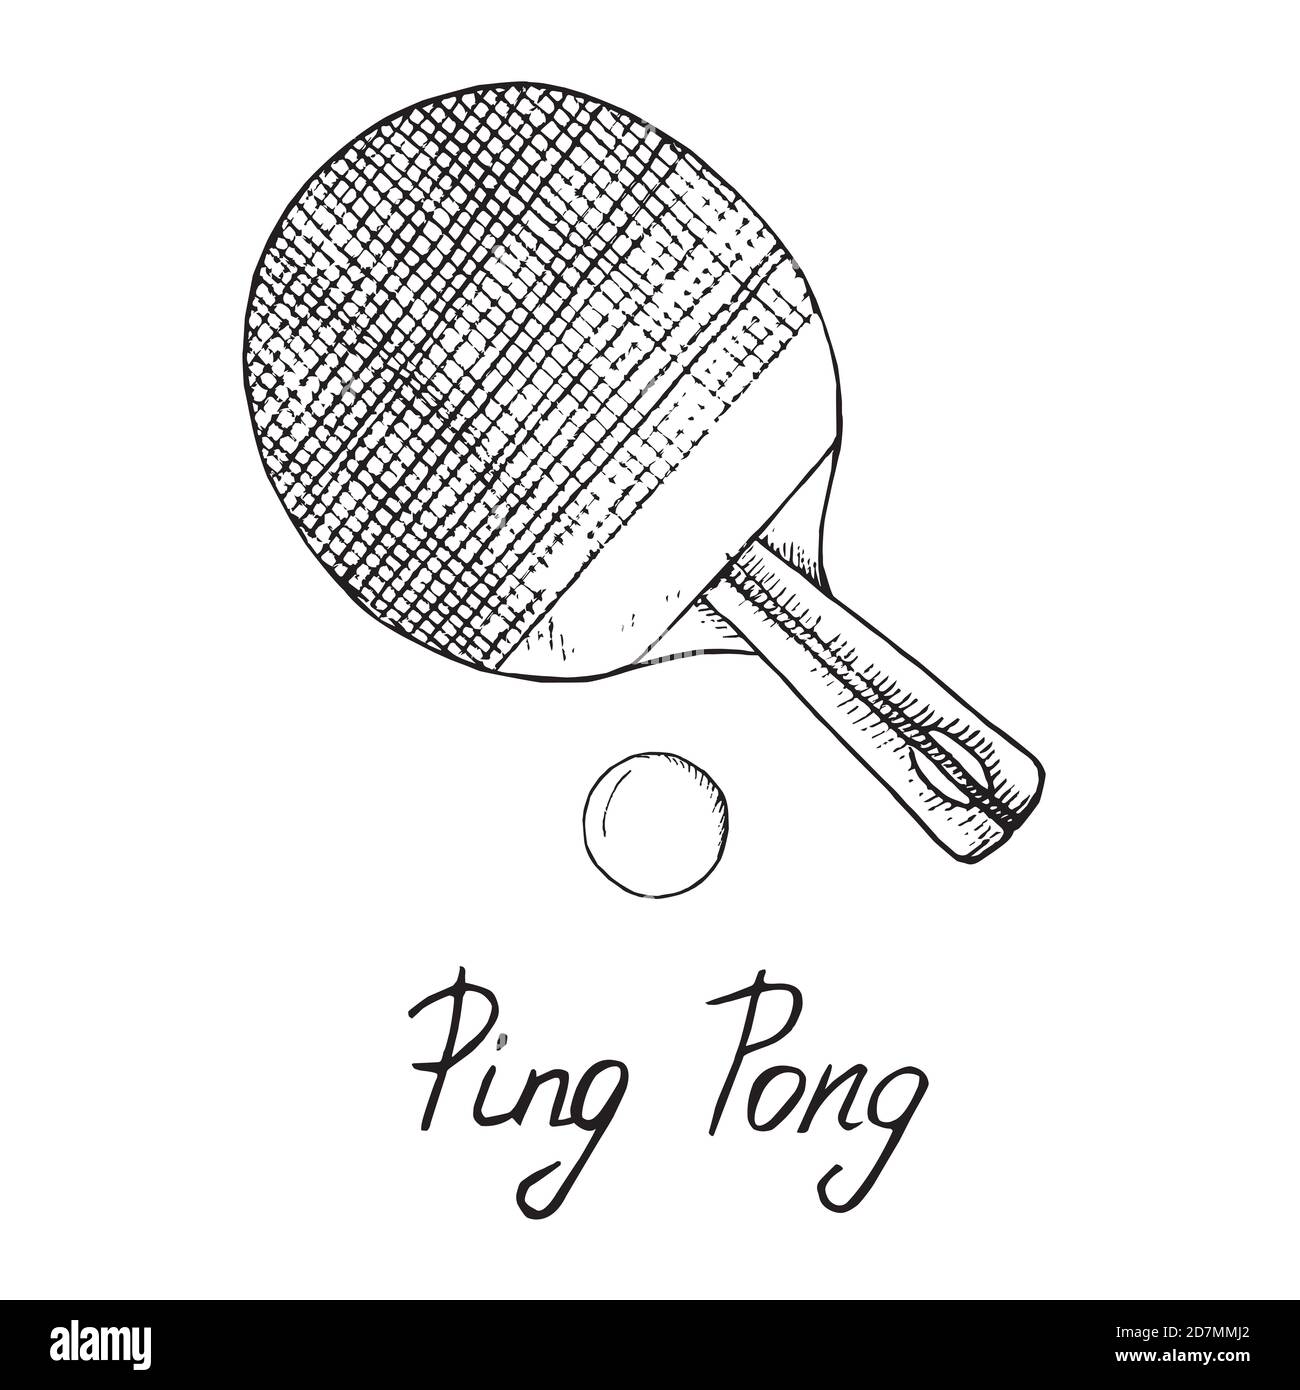 ping pong racket and ball image sketch | Stock vector | Colourbox